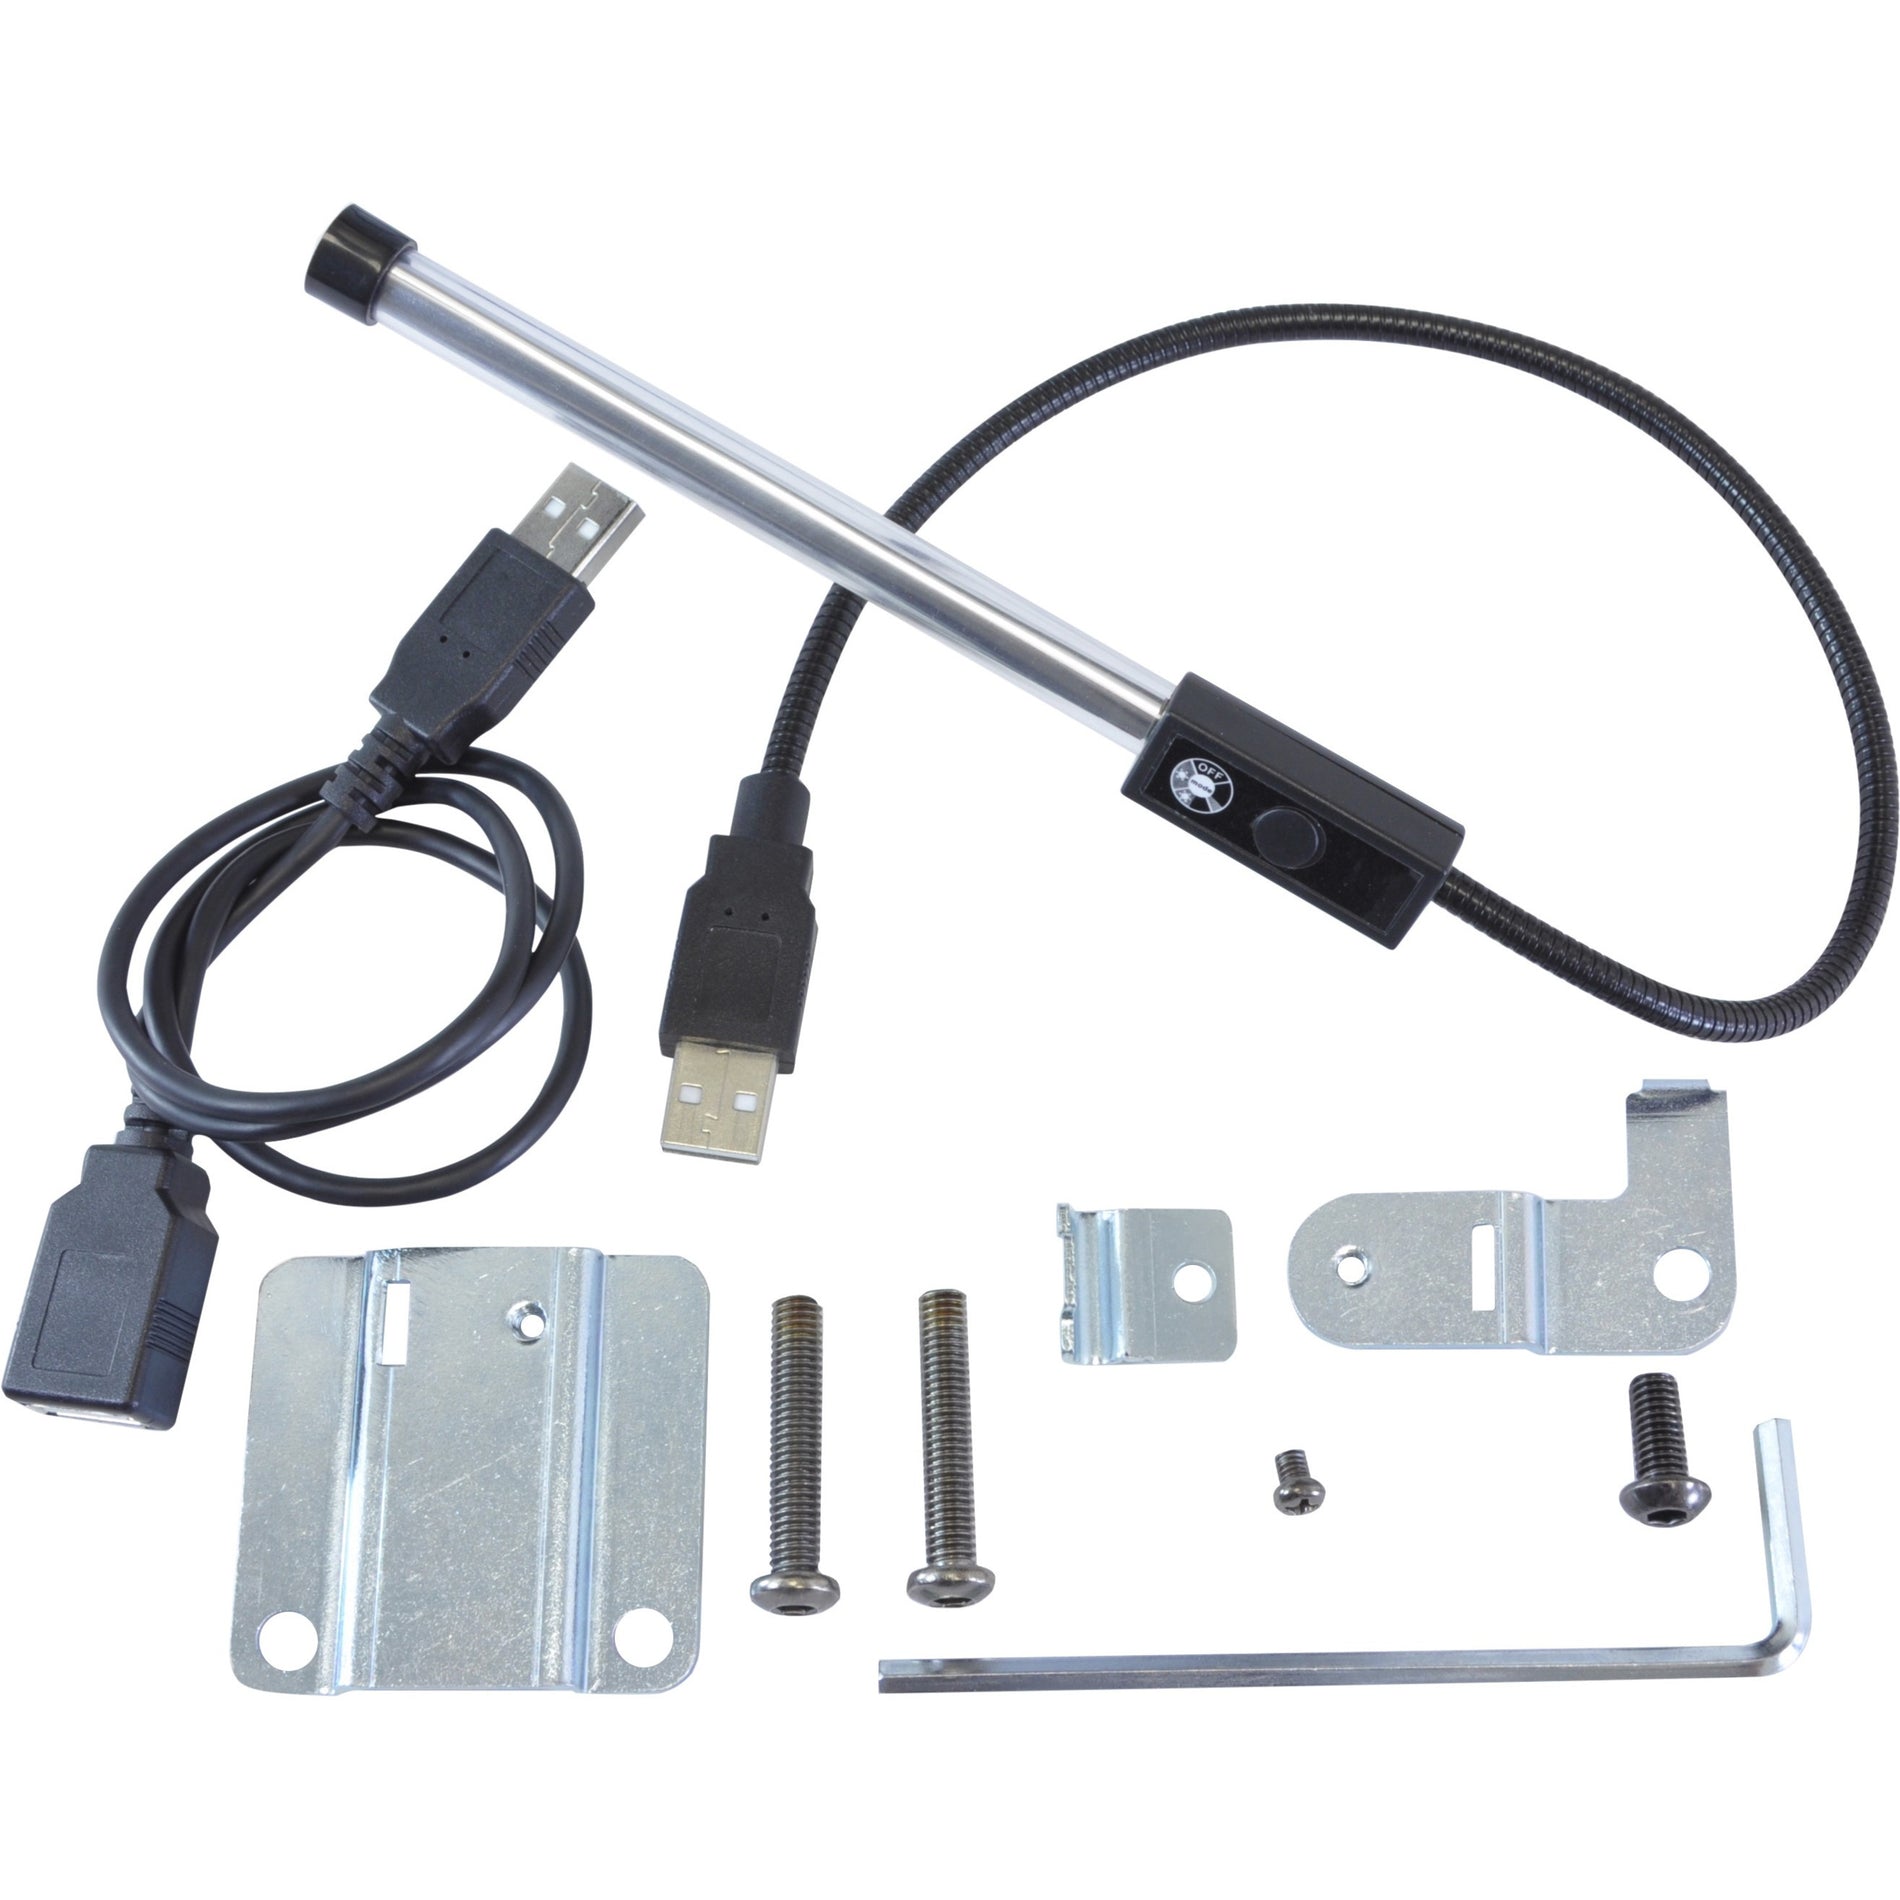 Ergotron 97-754-002 SV Tasklight, USB Powered Reading Light with Adjustable Brightness and 10 LED Lights